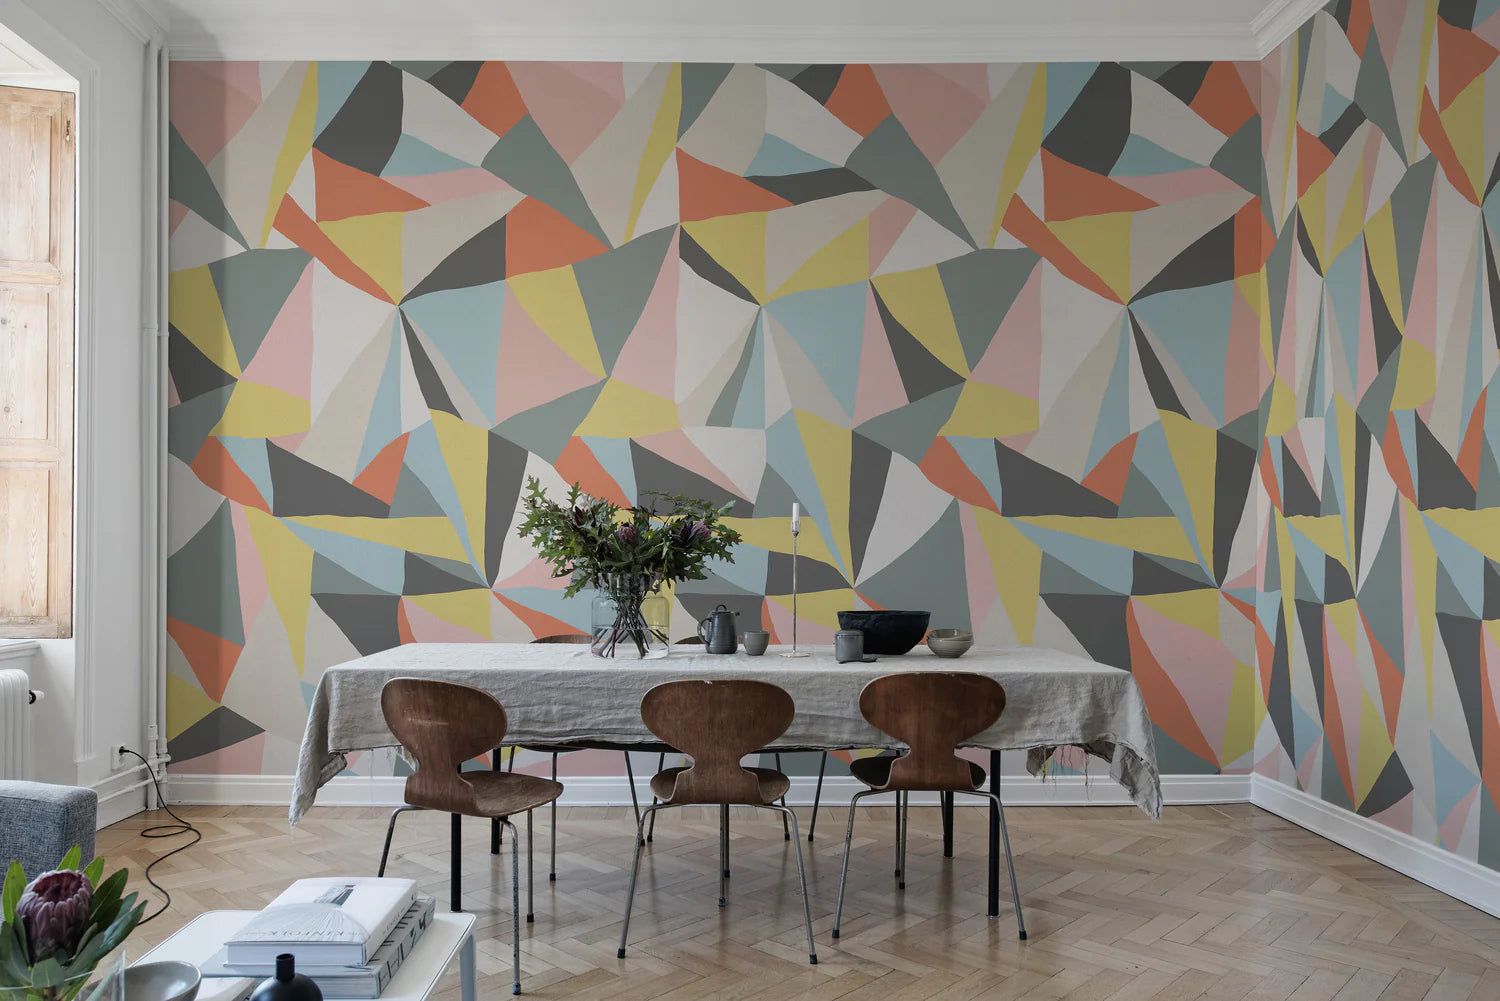 Retro, Geometric Wallpaper in living room